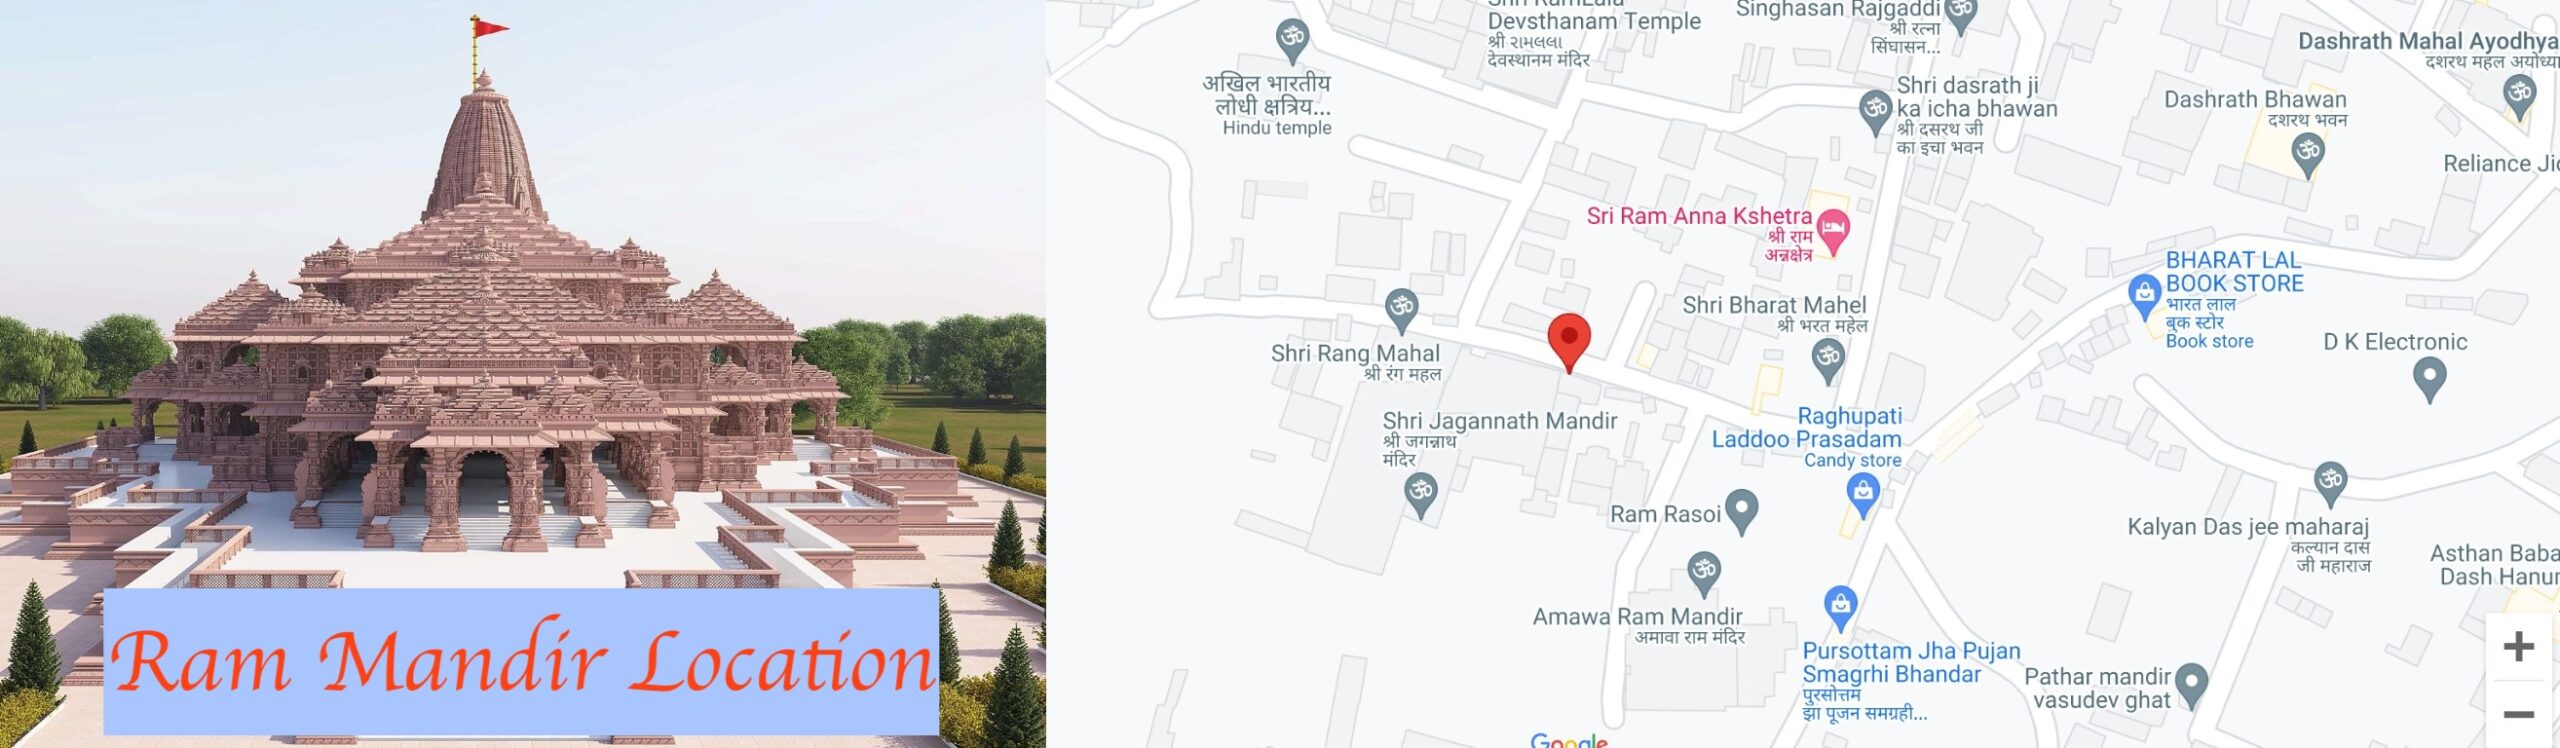 Ram Mandir Location Ayodhya